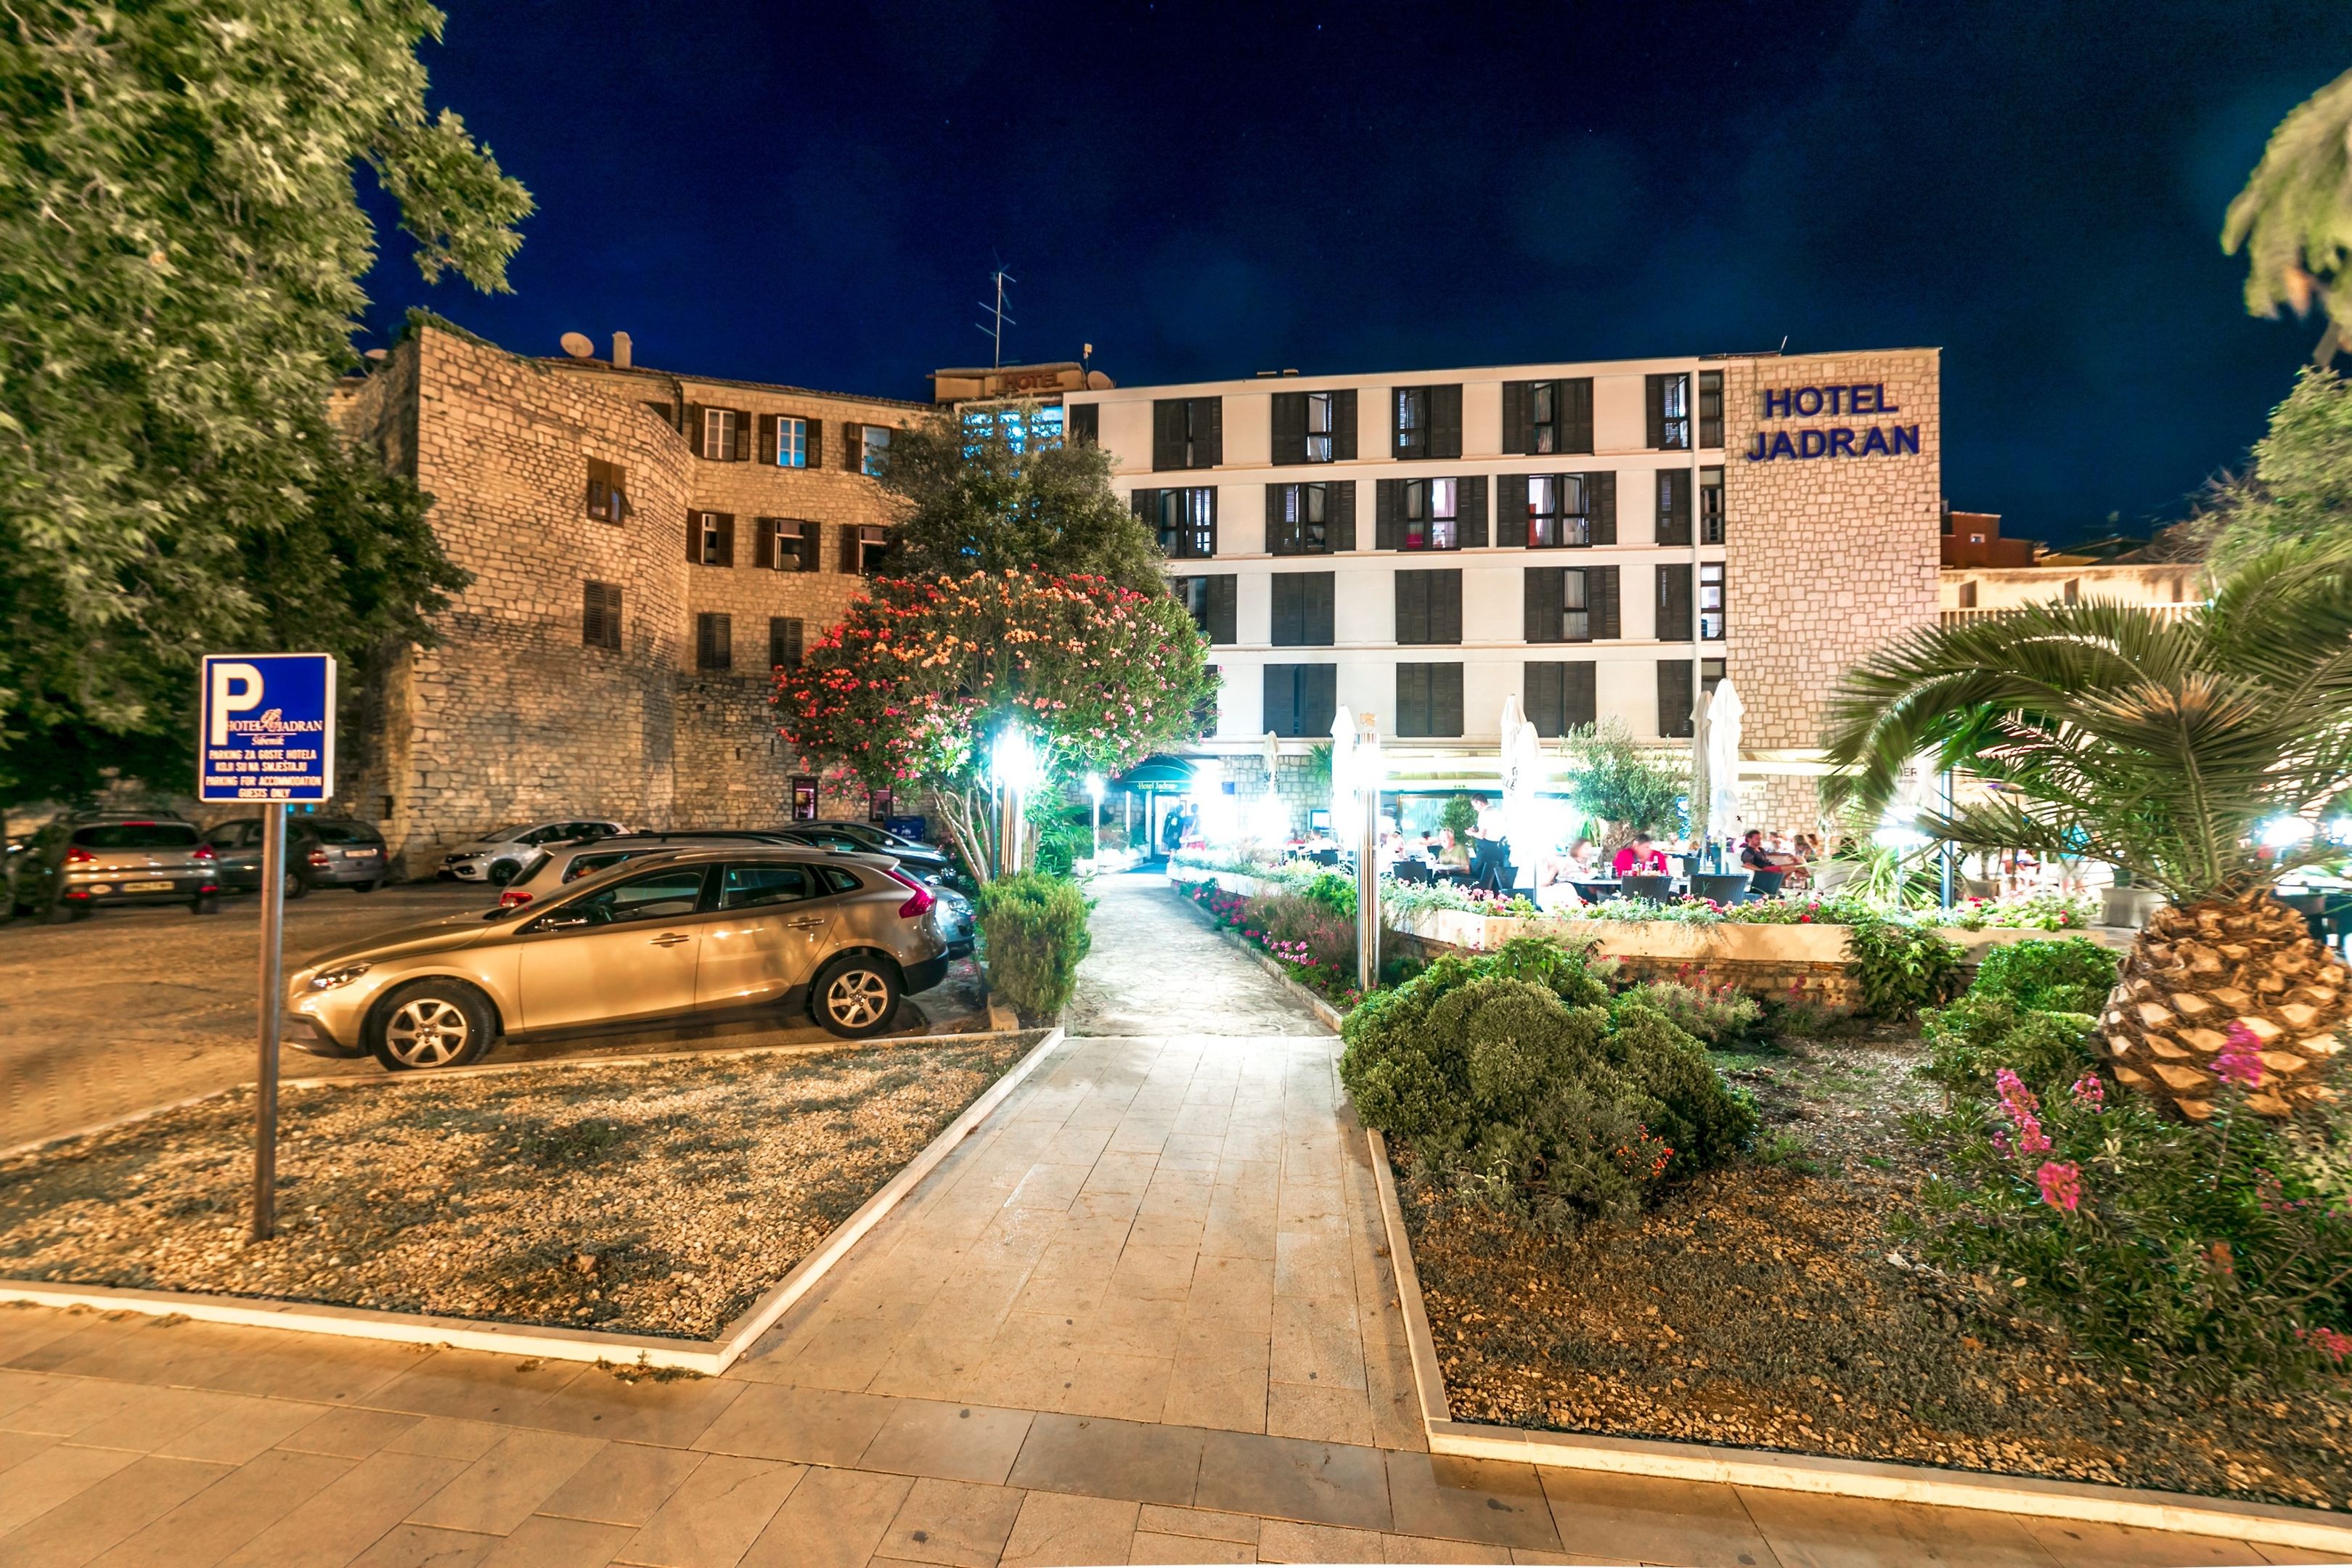 Rivijera Hotel Jadran Sibenik